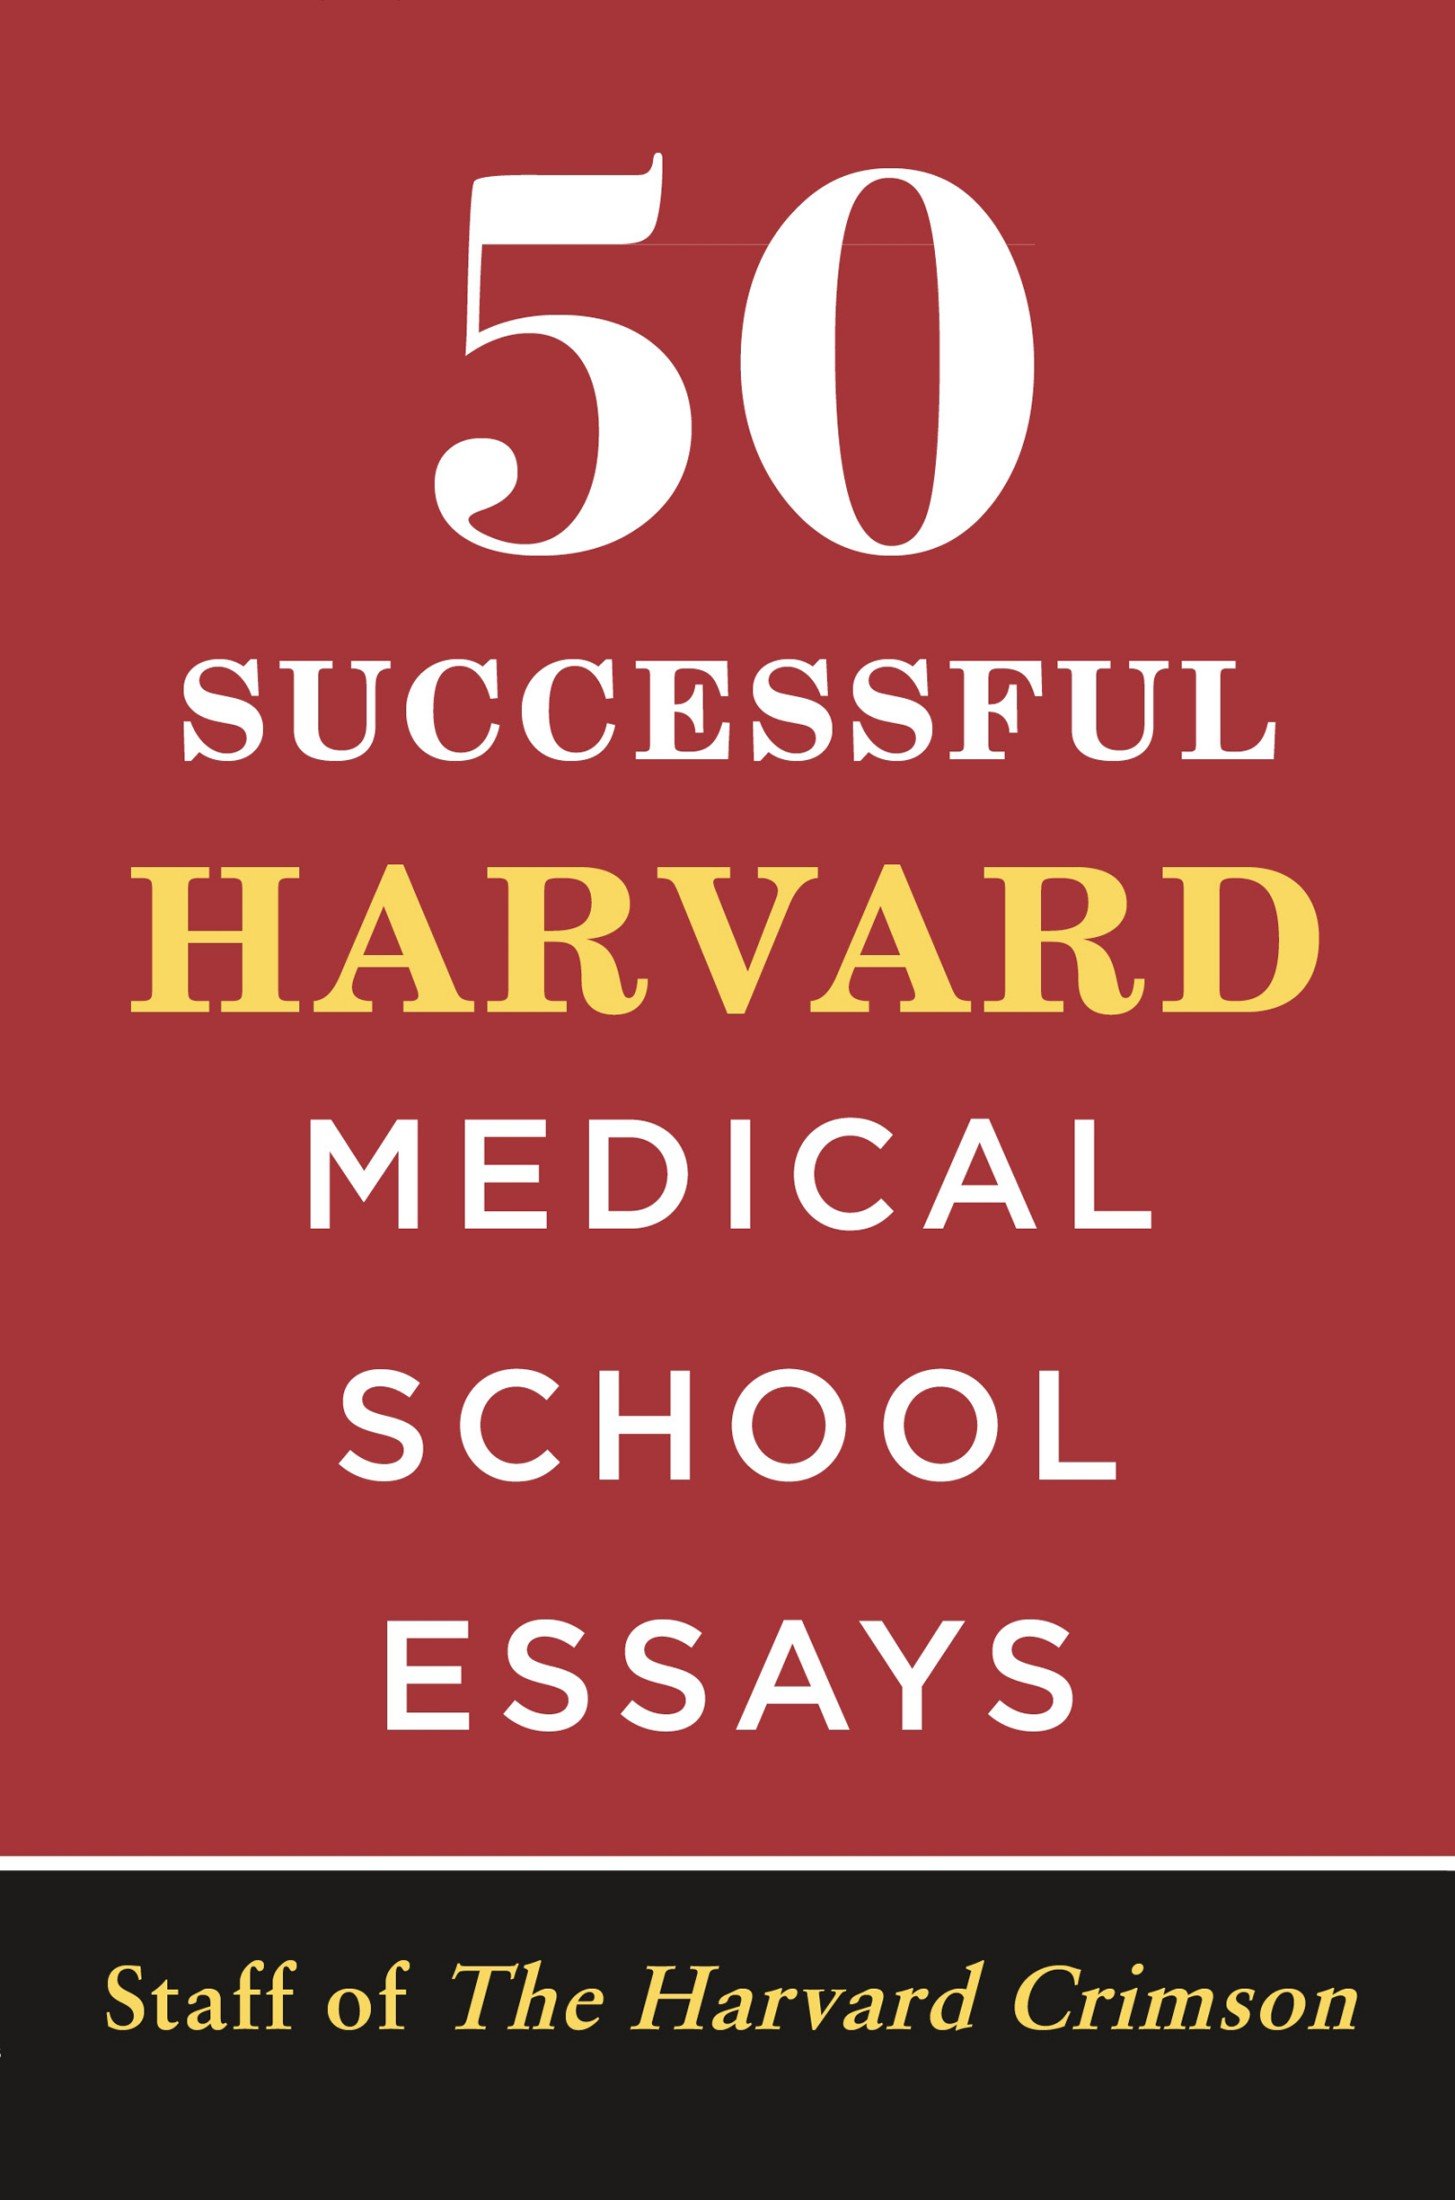 do you write essays in medical school